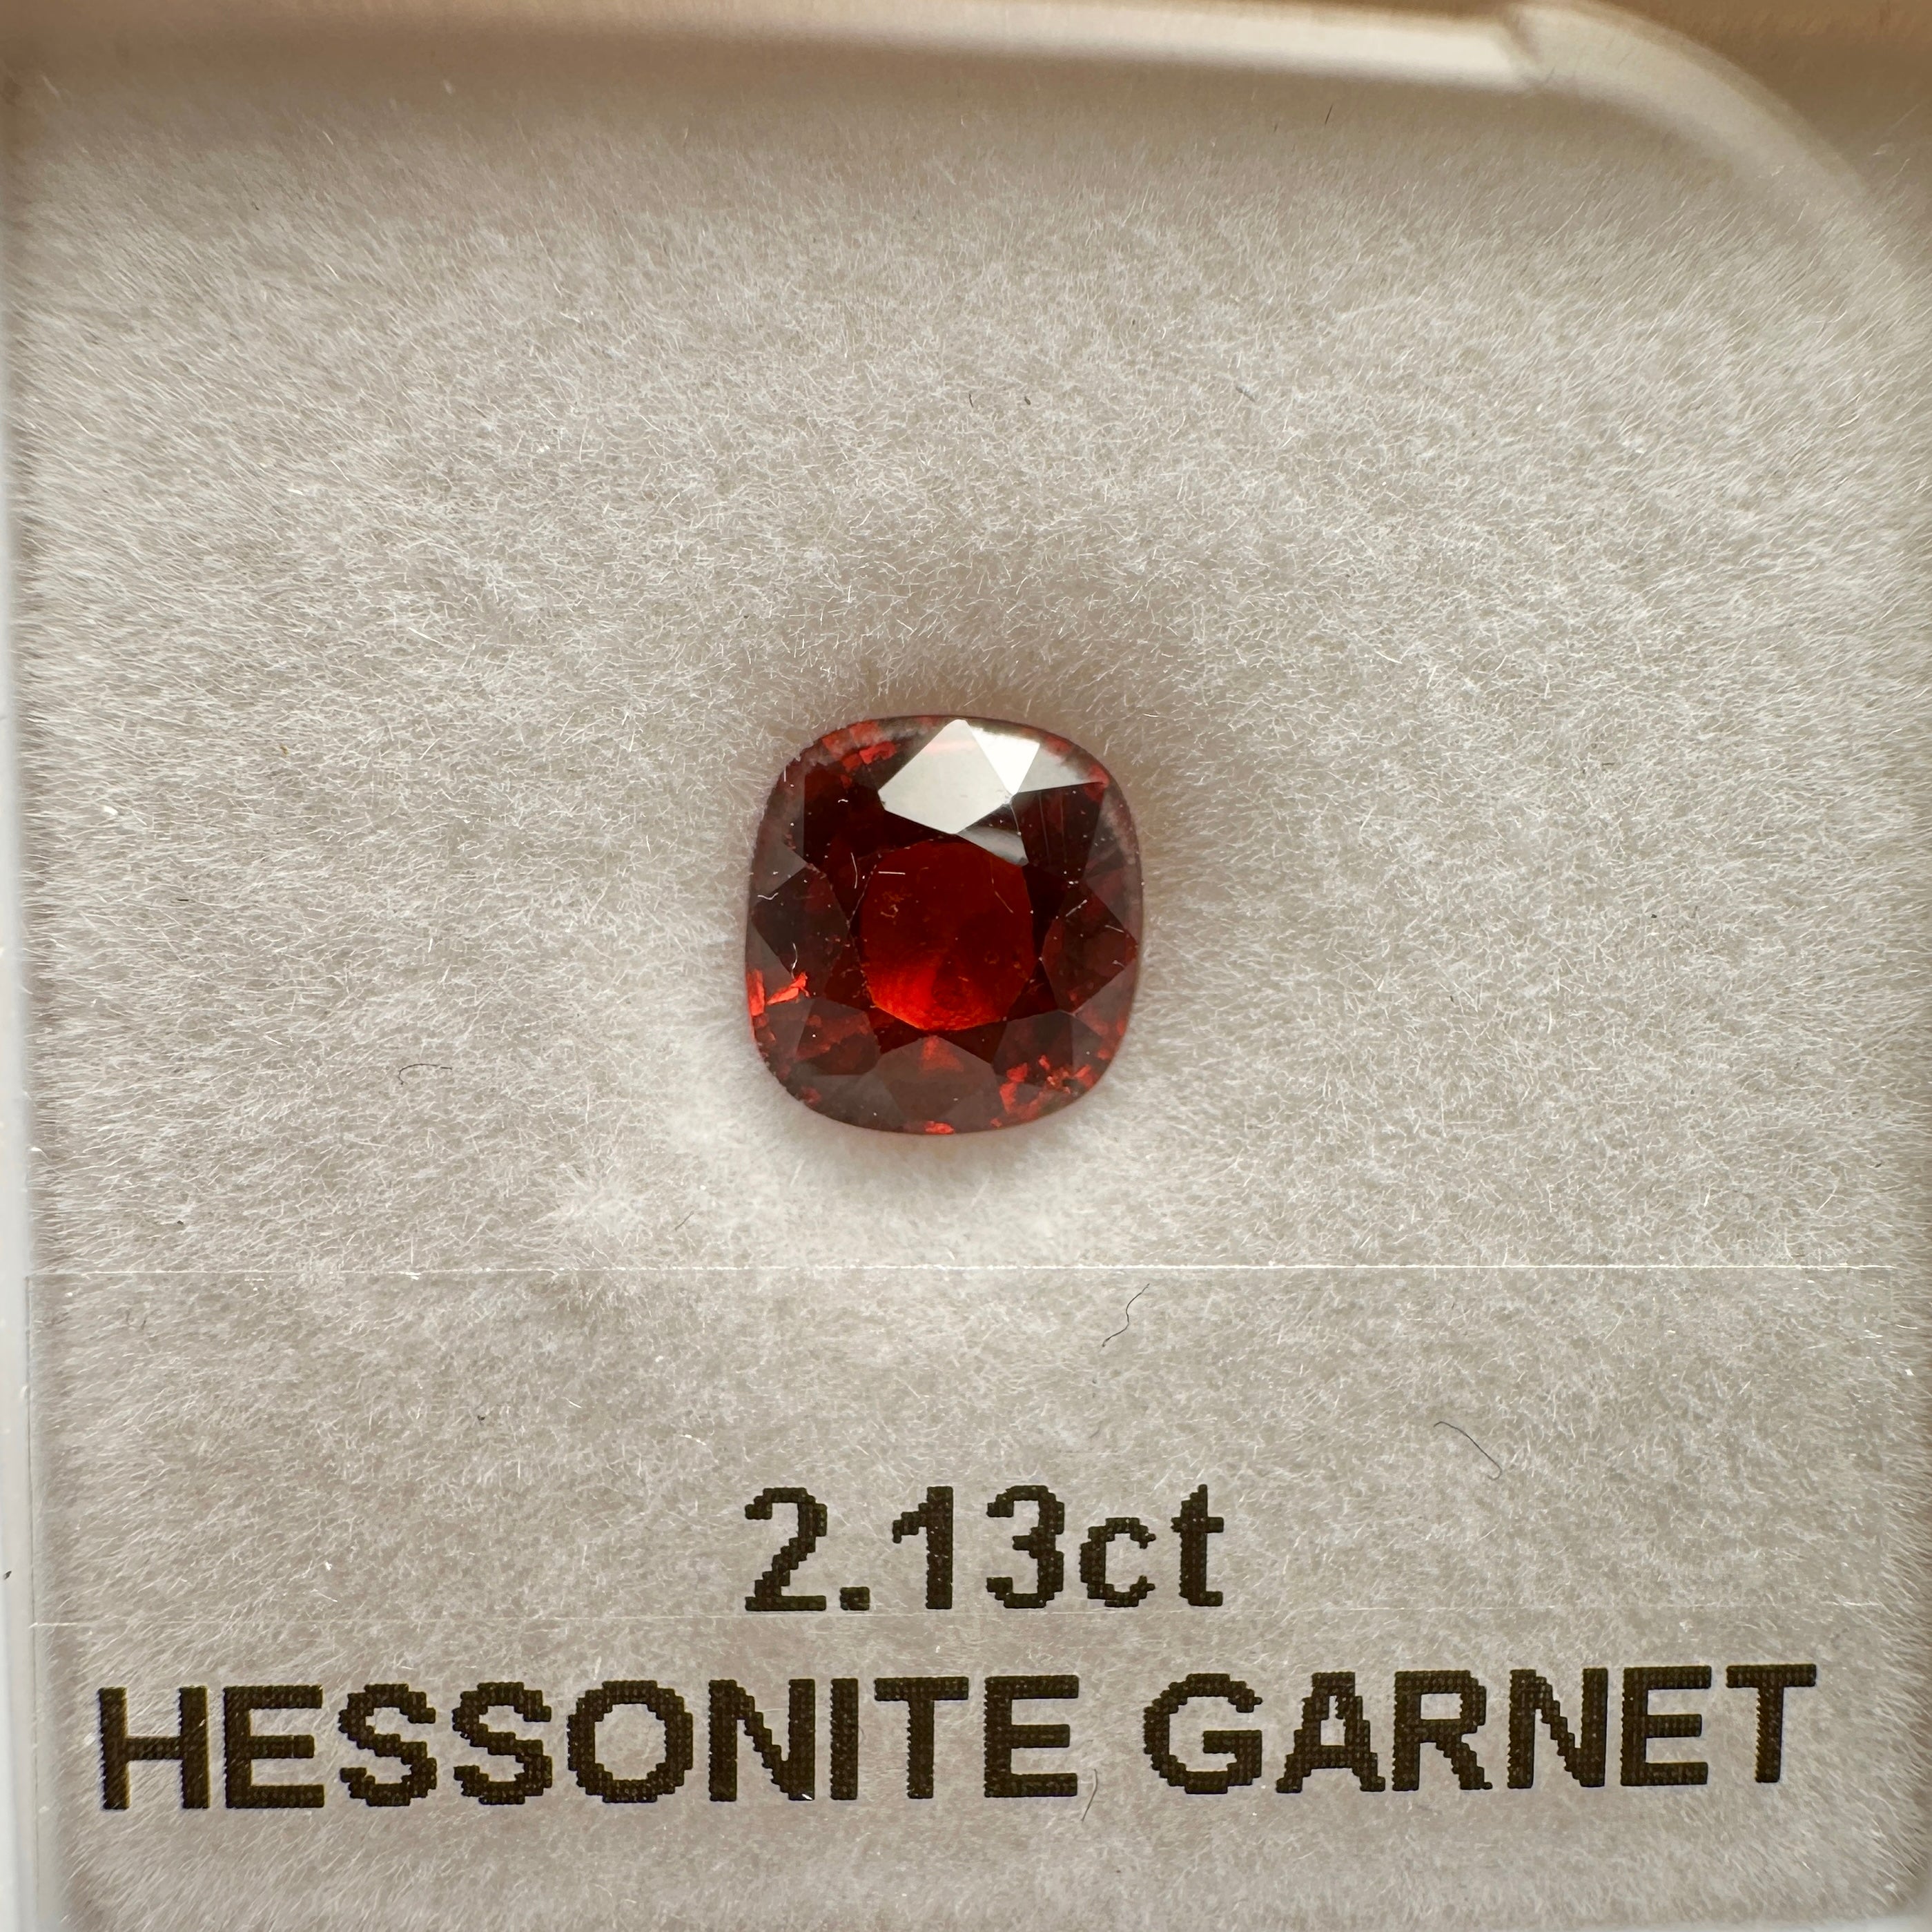 2.13ct Hessonite Garnet, Untreated Unheated, native cut